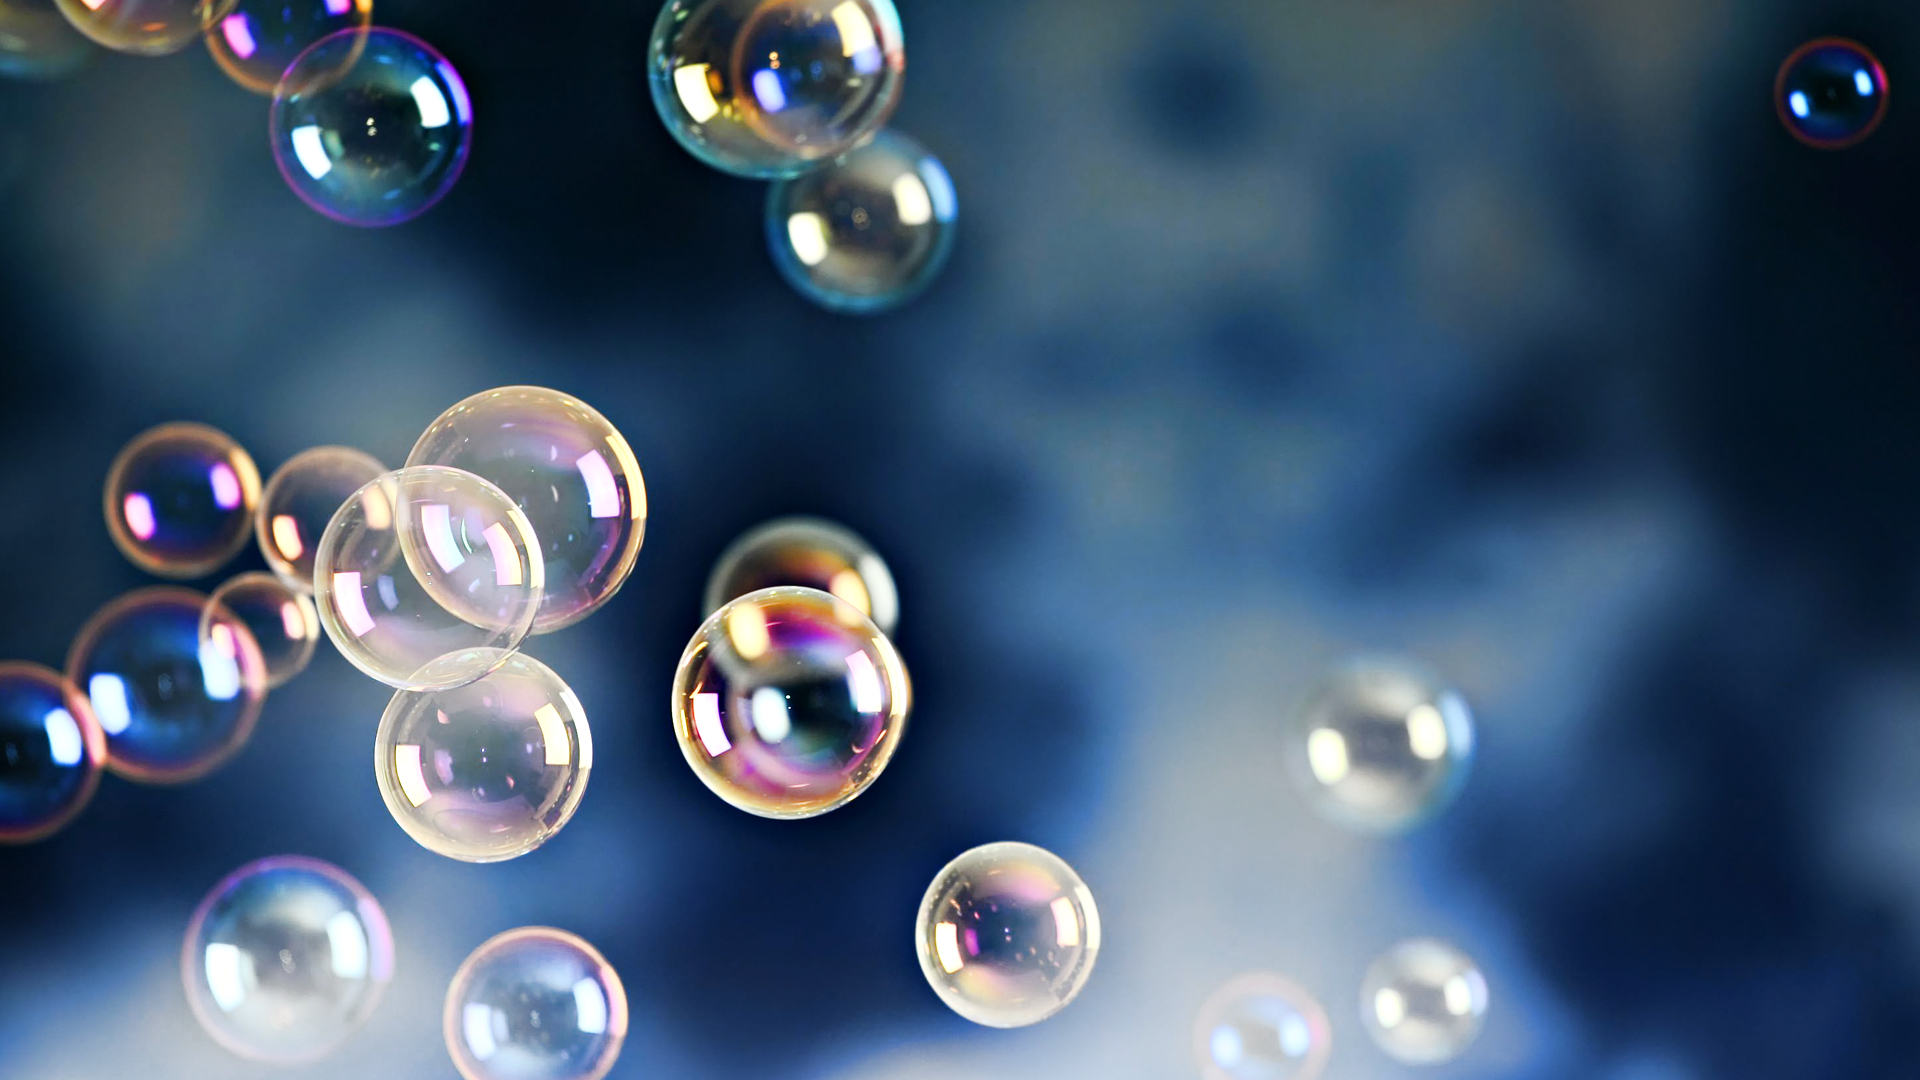 Bubbles Wallpaper. HD Background Image. Photo